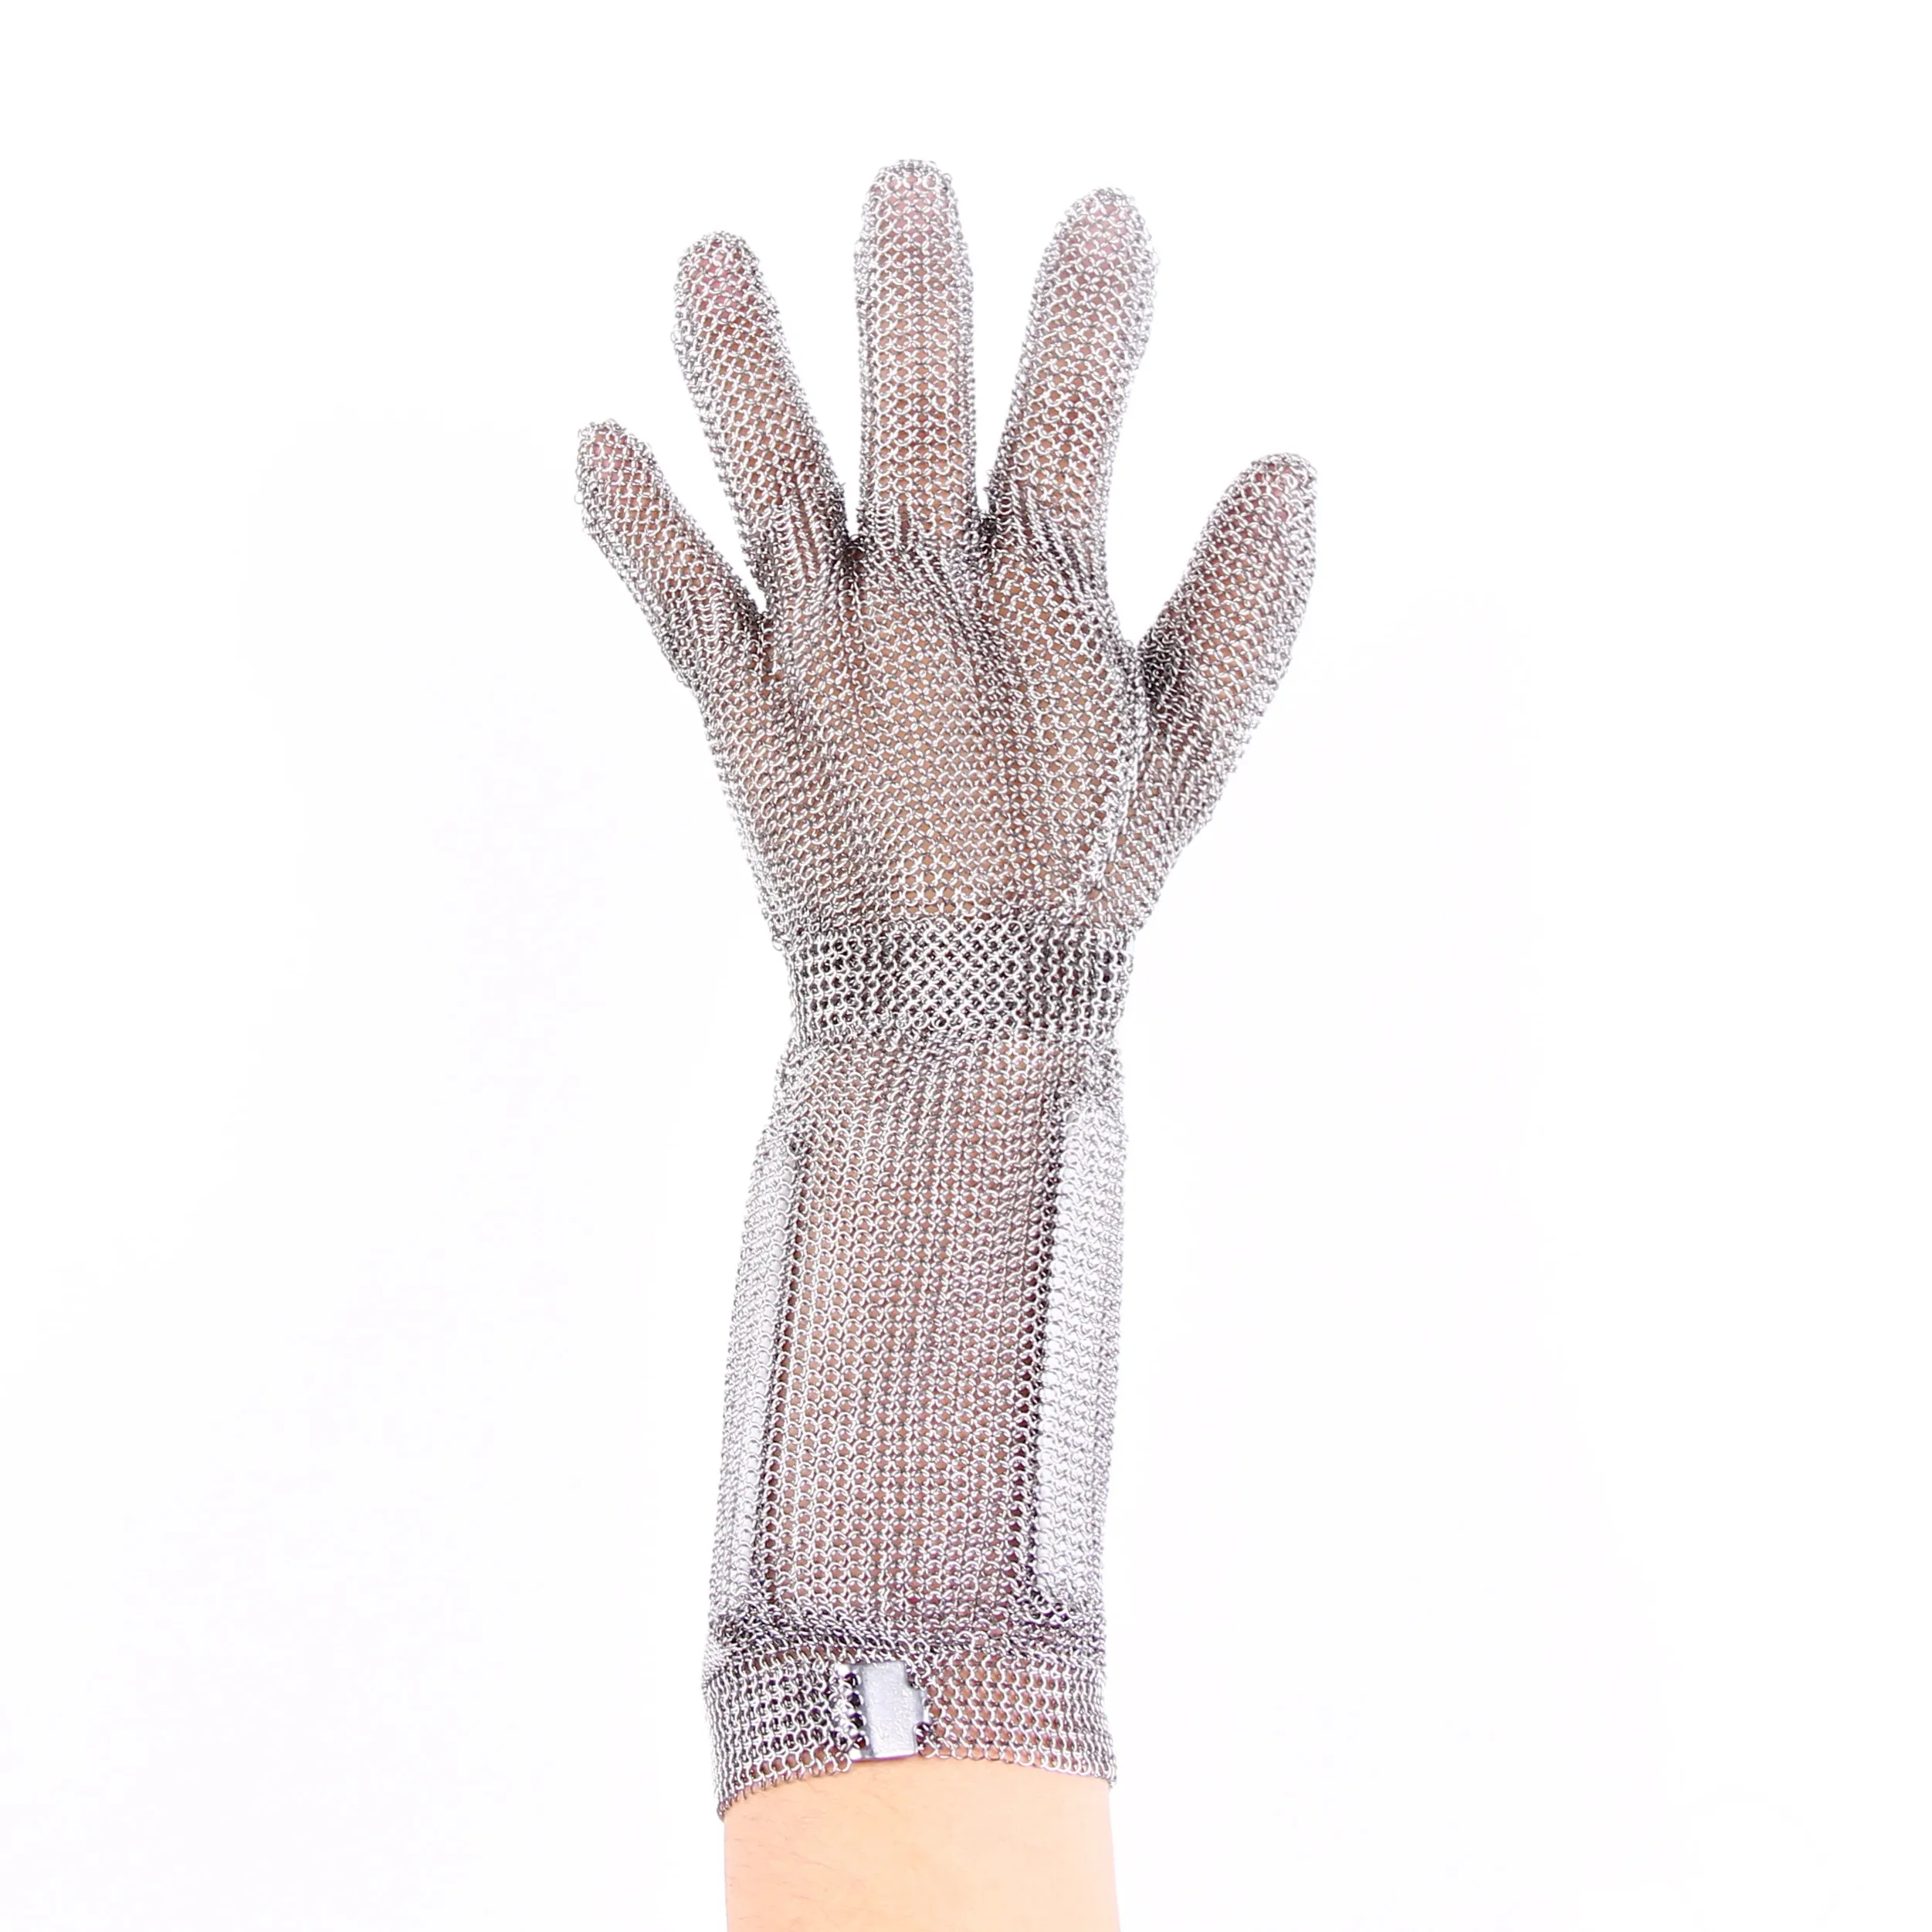 Sarung tangan Stainless Steel, sarung tangan besi anti karat, sarung tangan panjang, jaring kawat logam, sarung tangan anti potong, sarung tangan kelas makanan 316